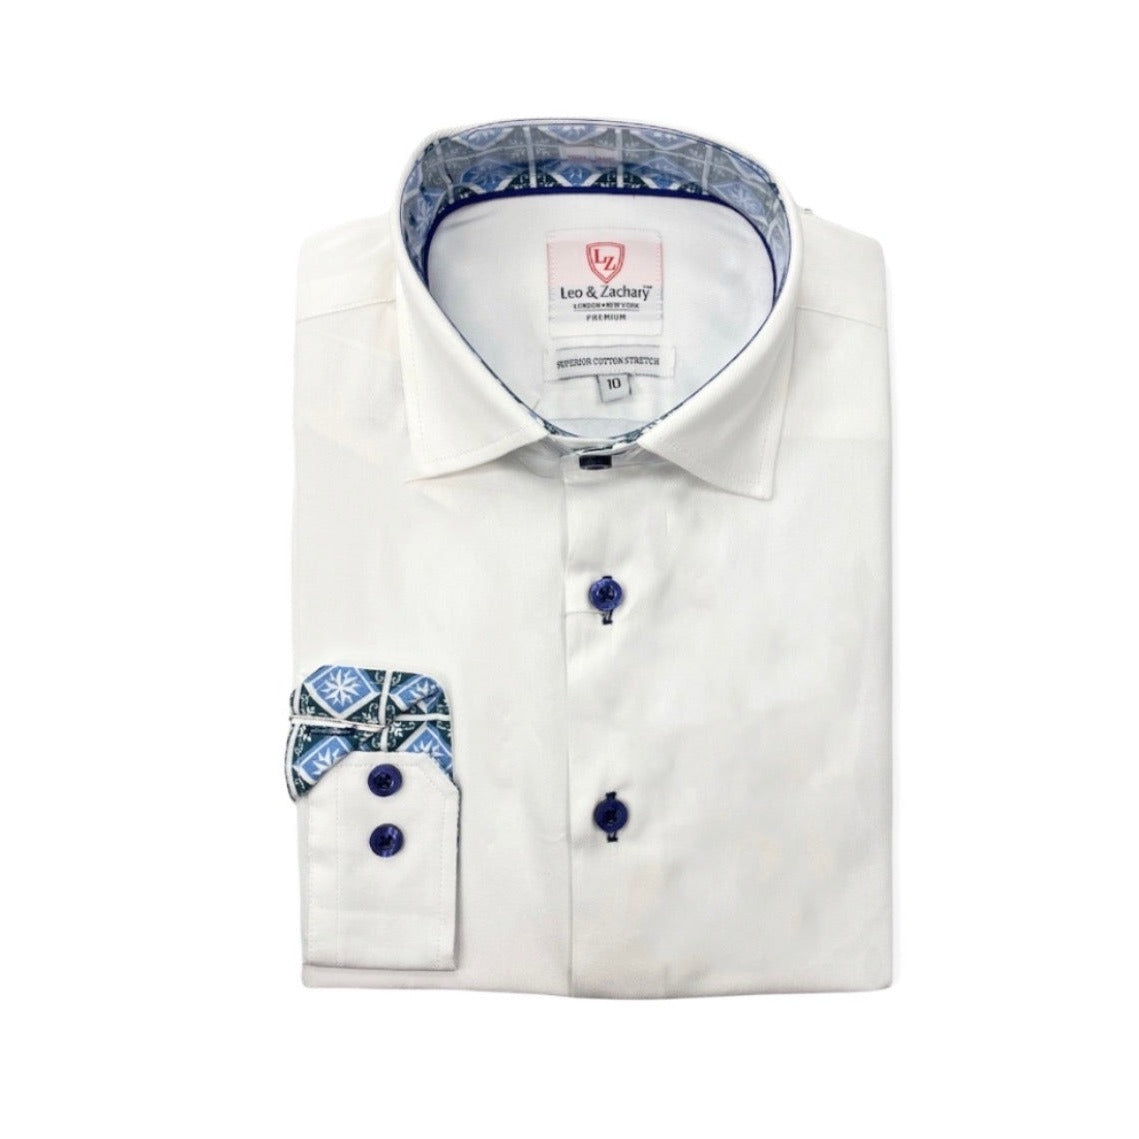 Leo & Zachary Boys White Non-Iron Dress Shirt_5501